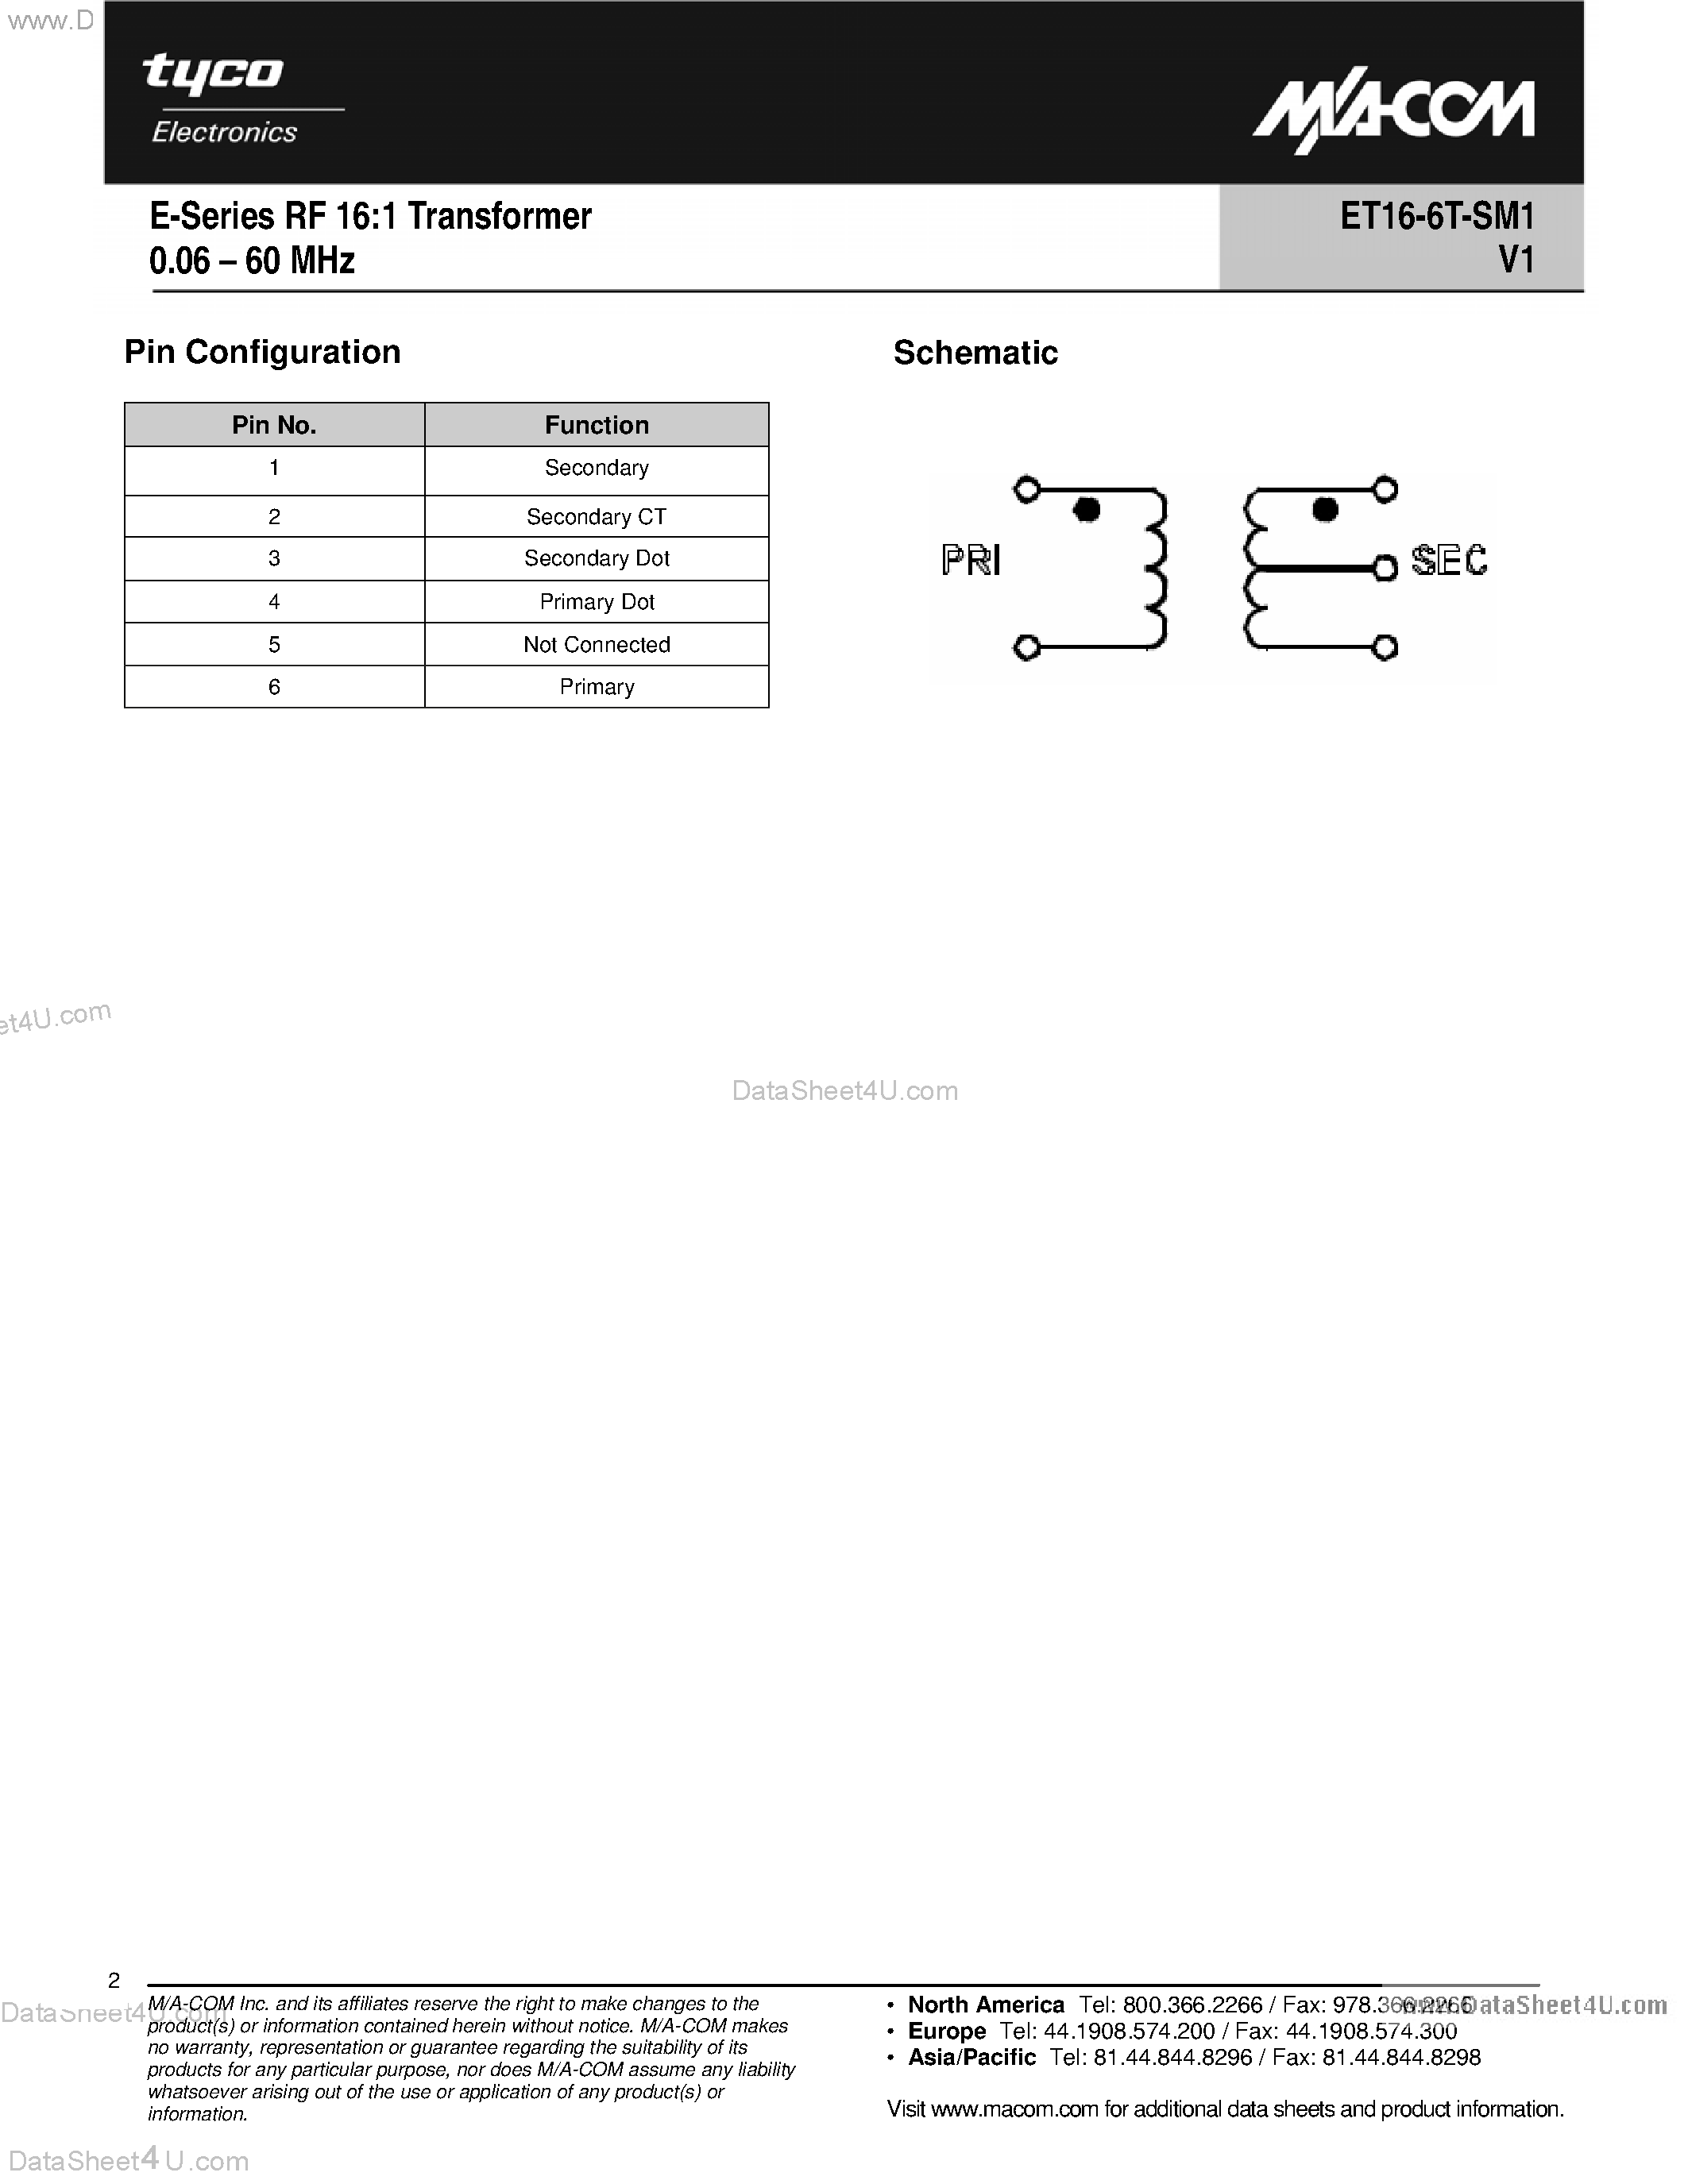 Datasheet ET16-6T-SM1 - E-Series RF 16:1 Transformer 0.06 - 60 MHz page 2